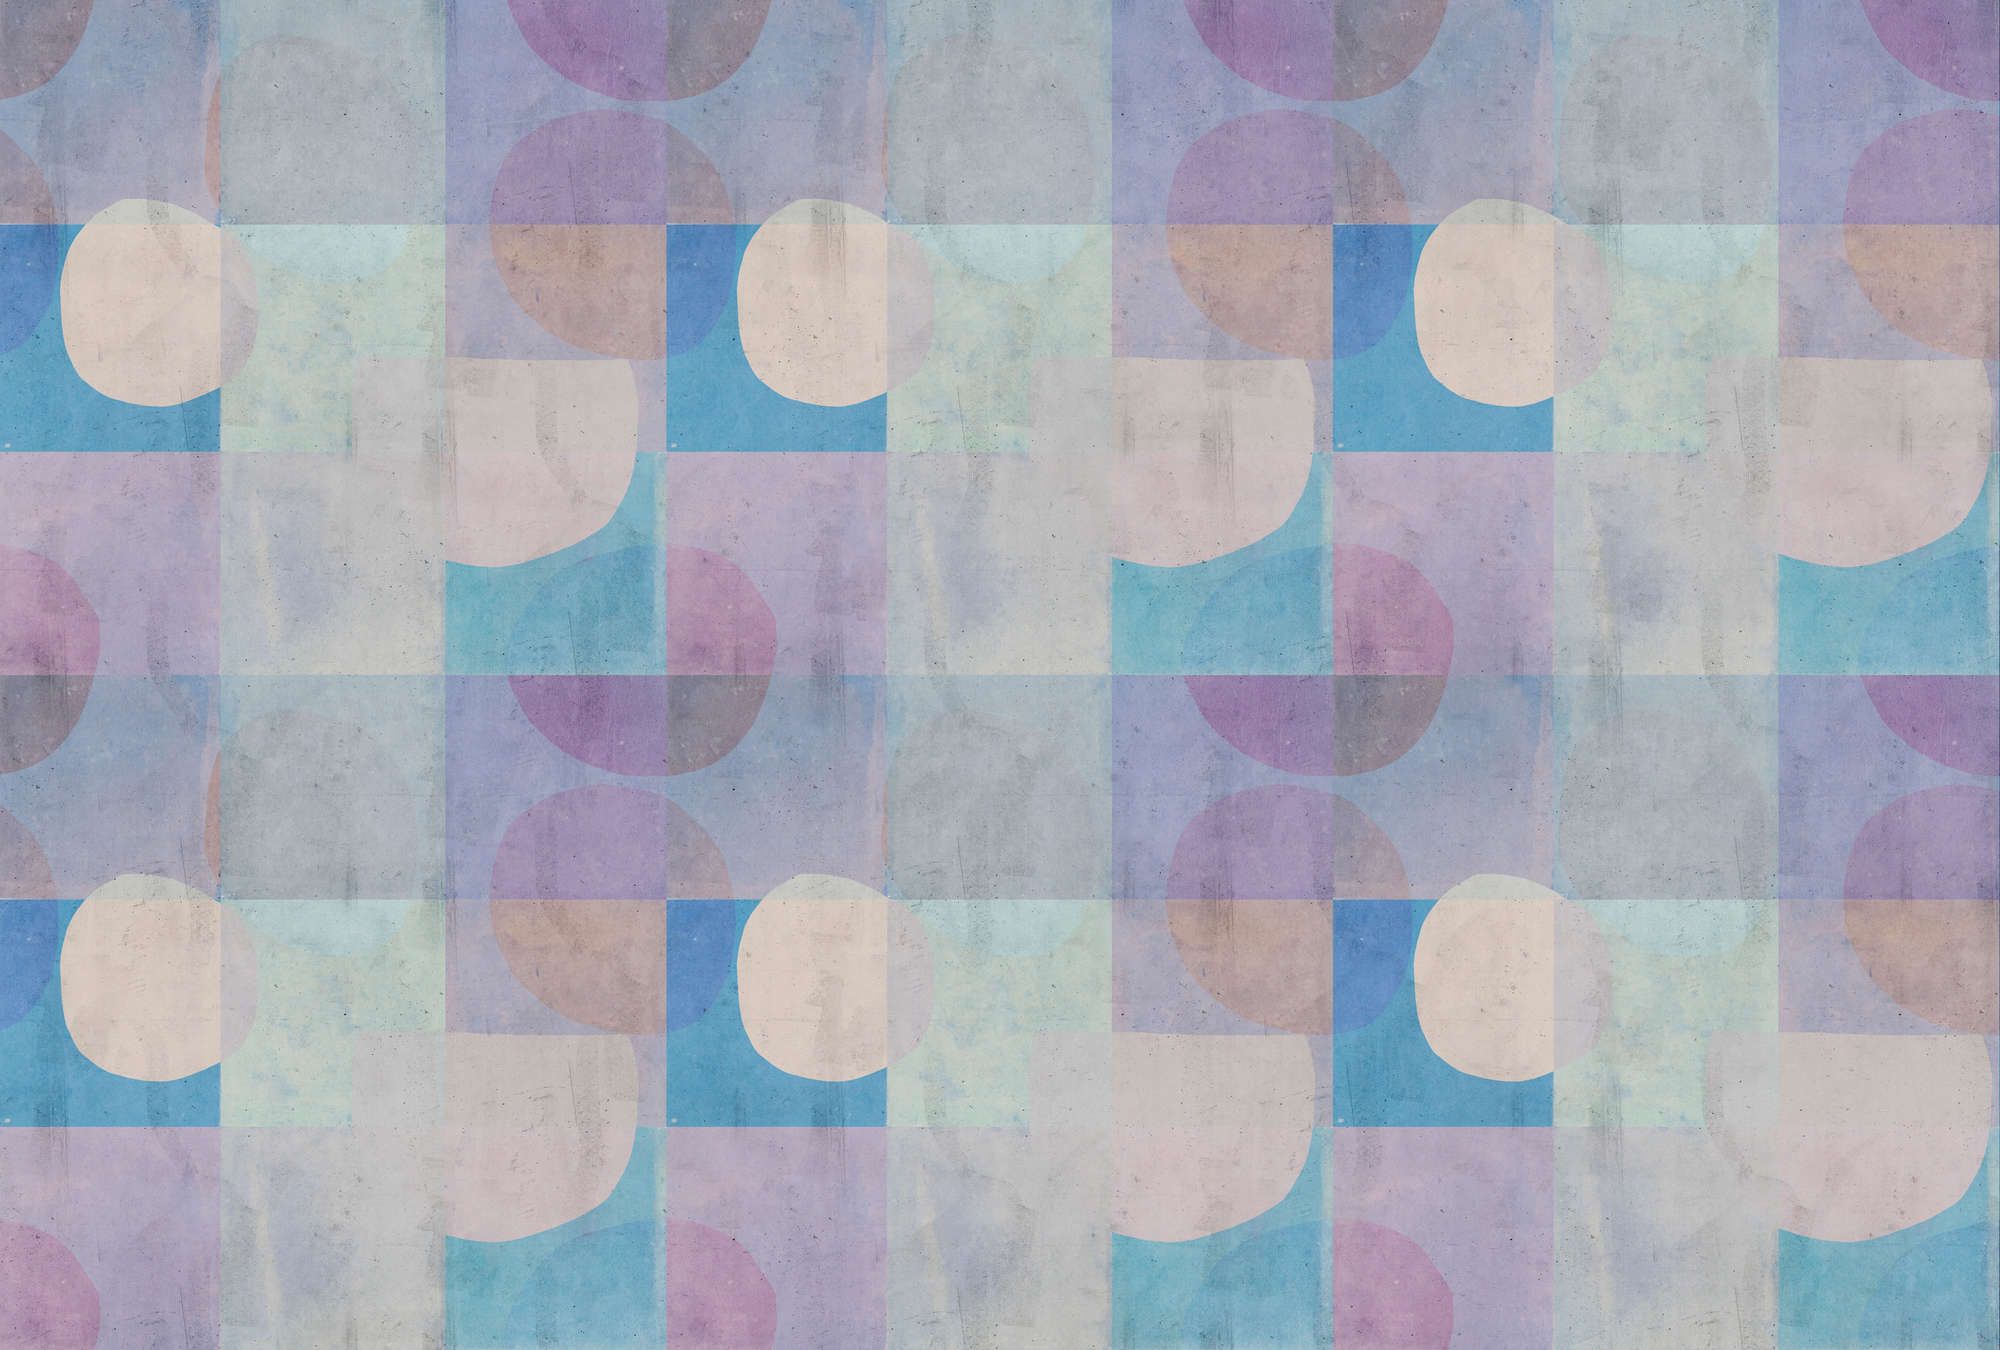             Photo wallpaper »elija 2« - retro pattern in concrete look - blue, purple | Smooth, slightly pearlescent non-woven fabric
        